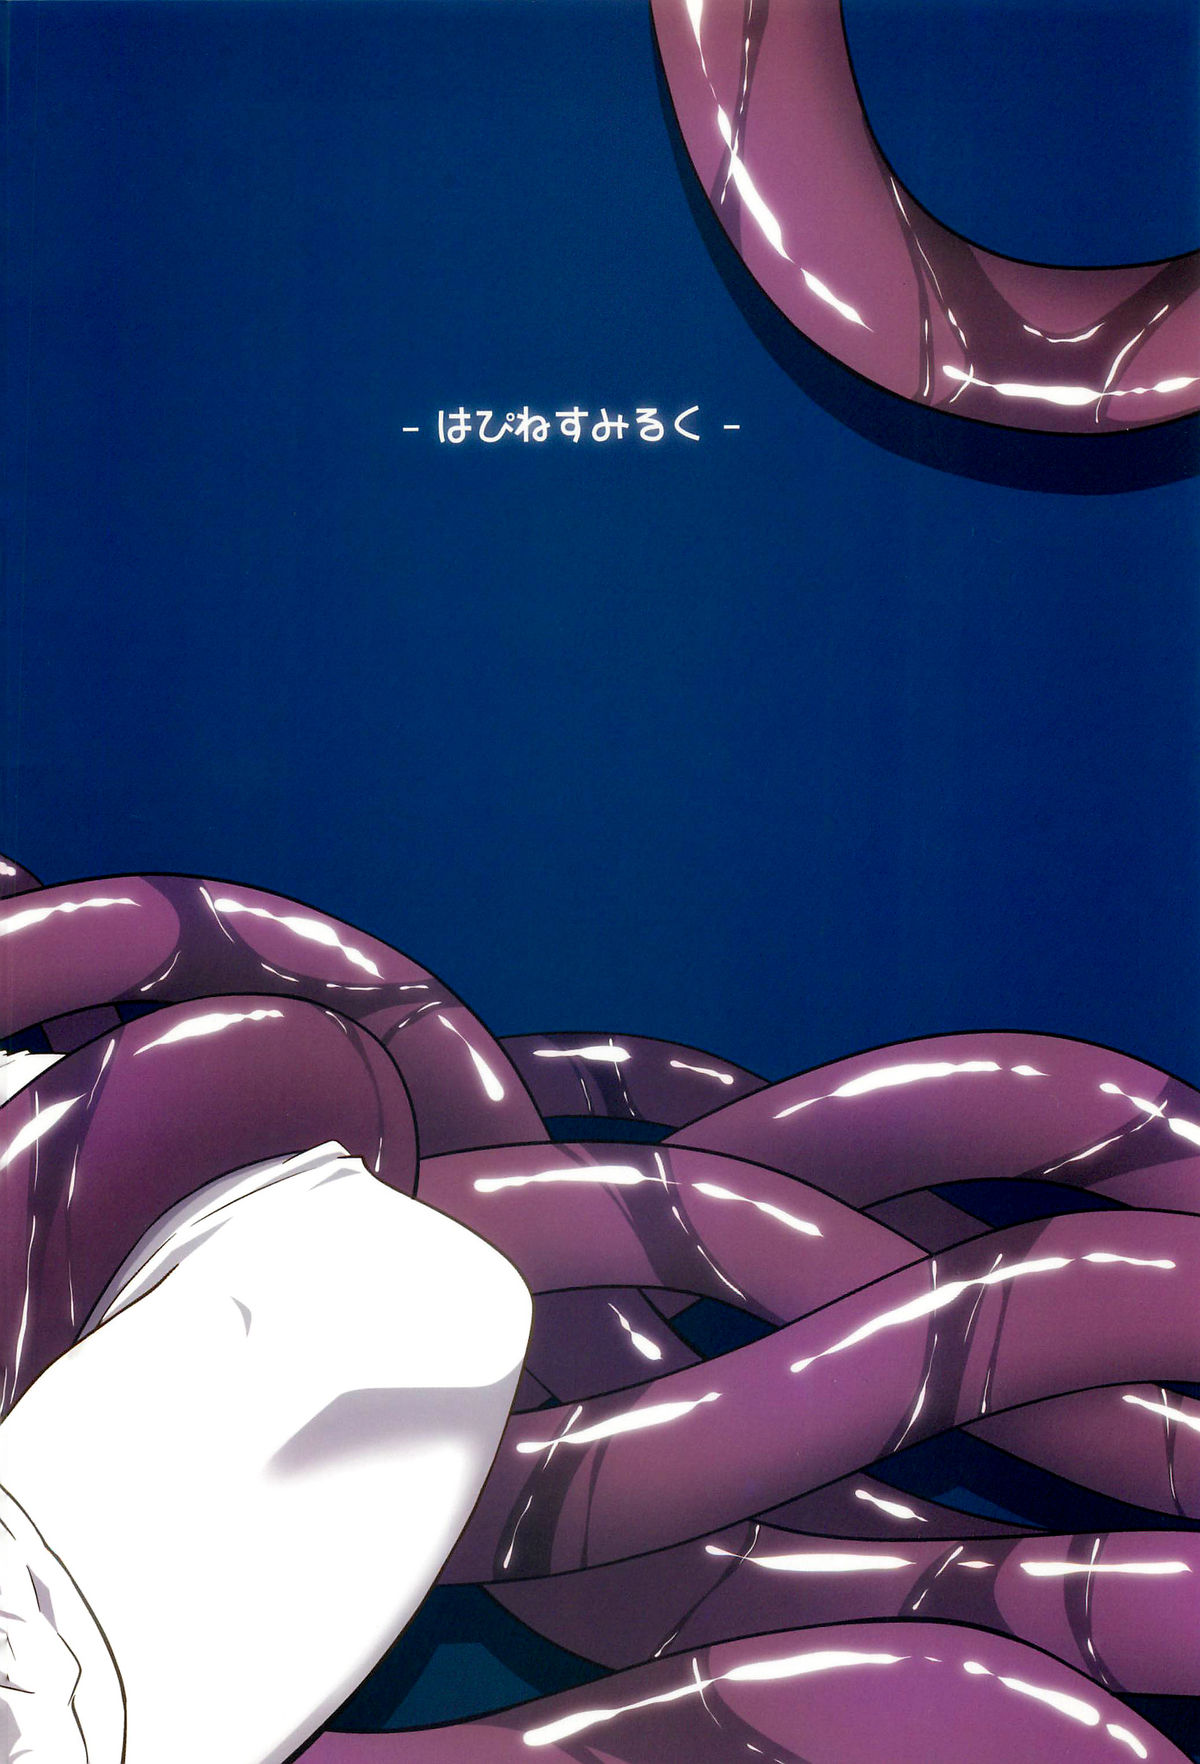 (COMIC1☆6) [はぴねすみるく (おびゃー)] 肉欲神仰信 - I give tentacle a body - (東方Project) [英訳]